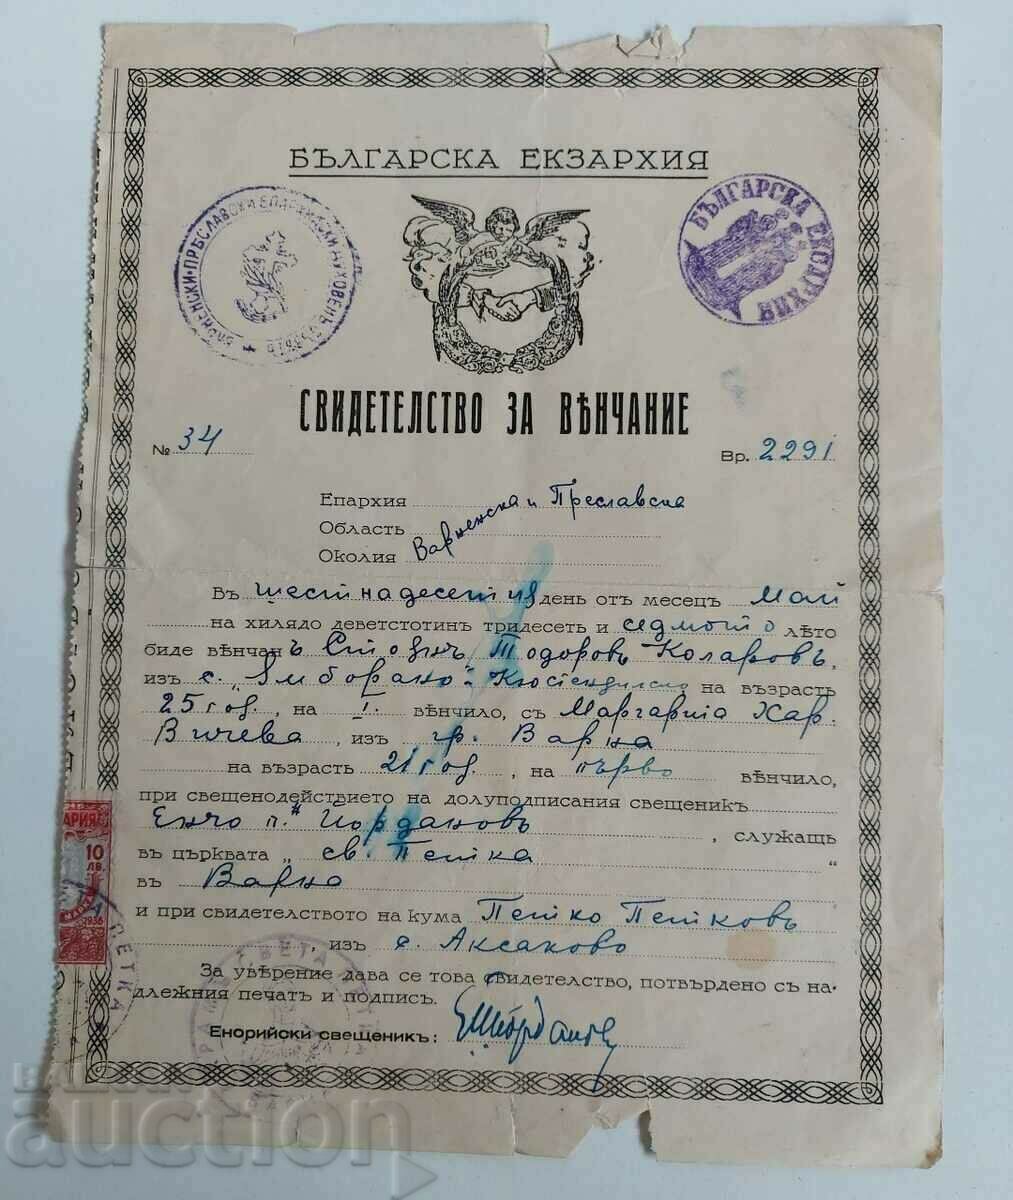 . 1937 СВИДЕТЕЛСТВО ЗА ВЕНЧАНИЕ